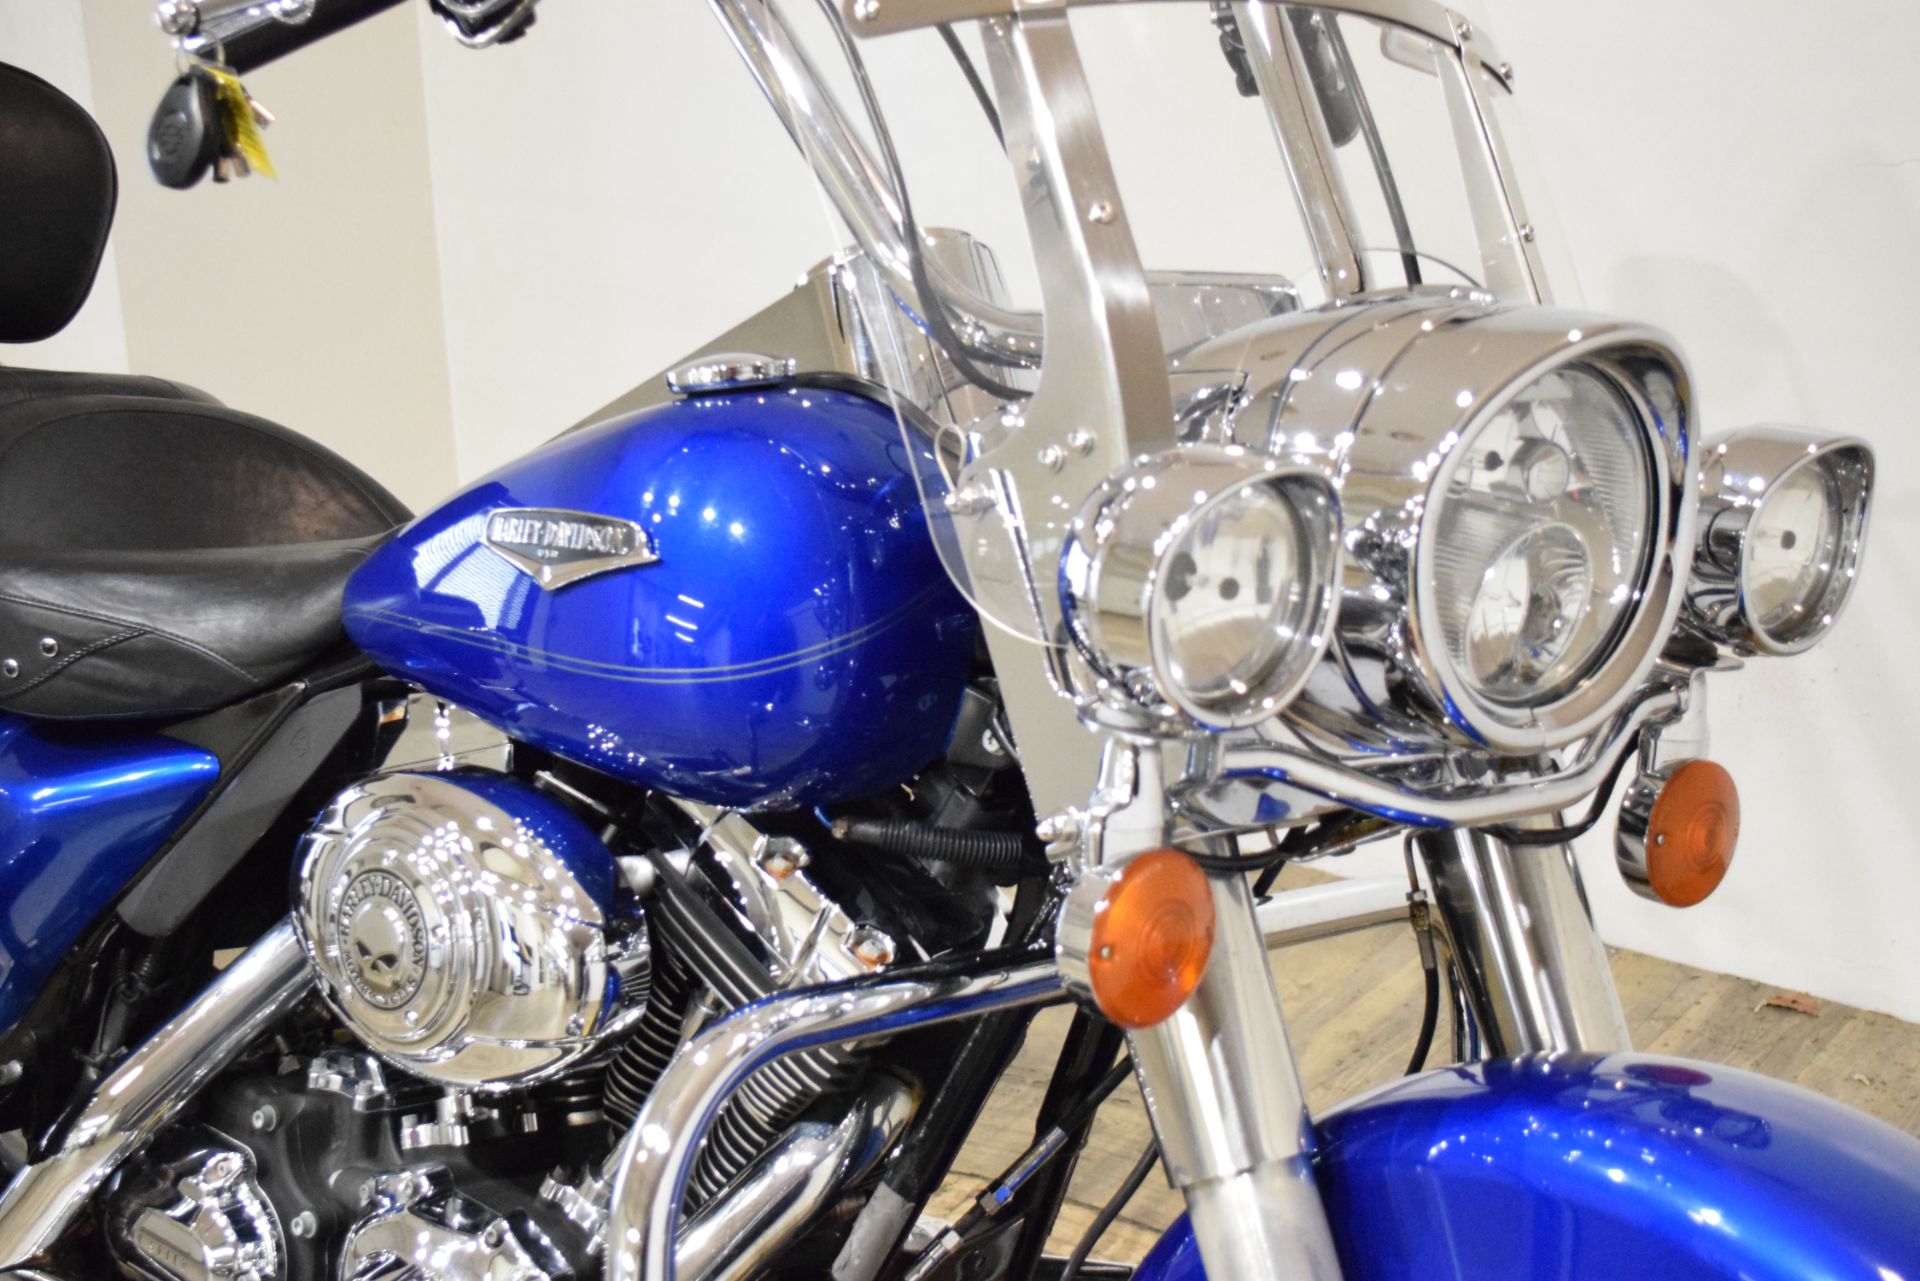 2007 Harley-Davidson Road King® Classic in Wauconda, Illinois - Photo 3